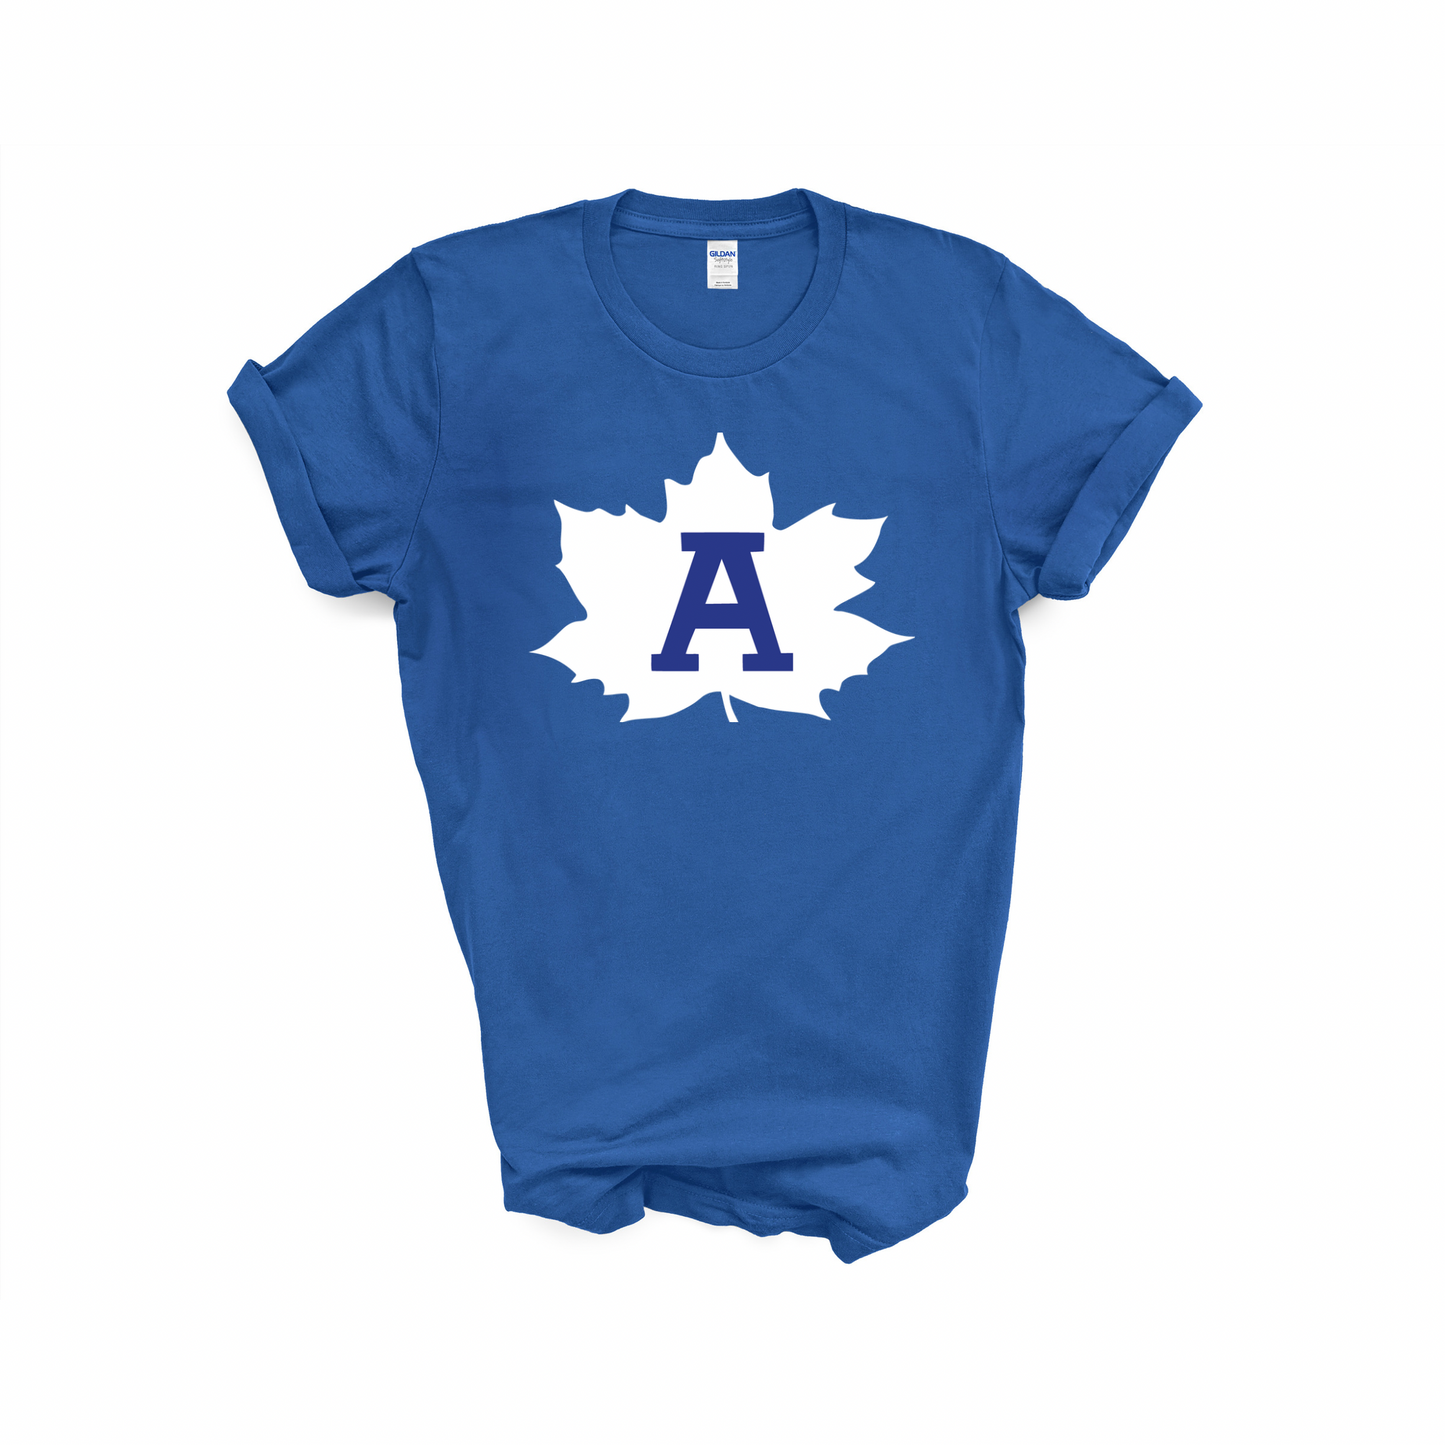 Adrian Maples T-shirt